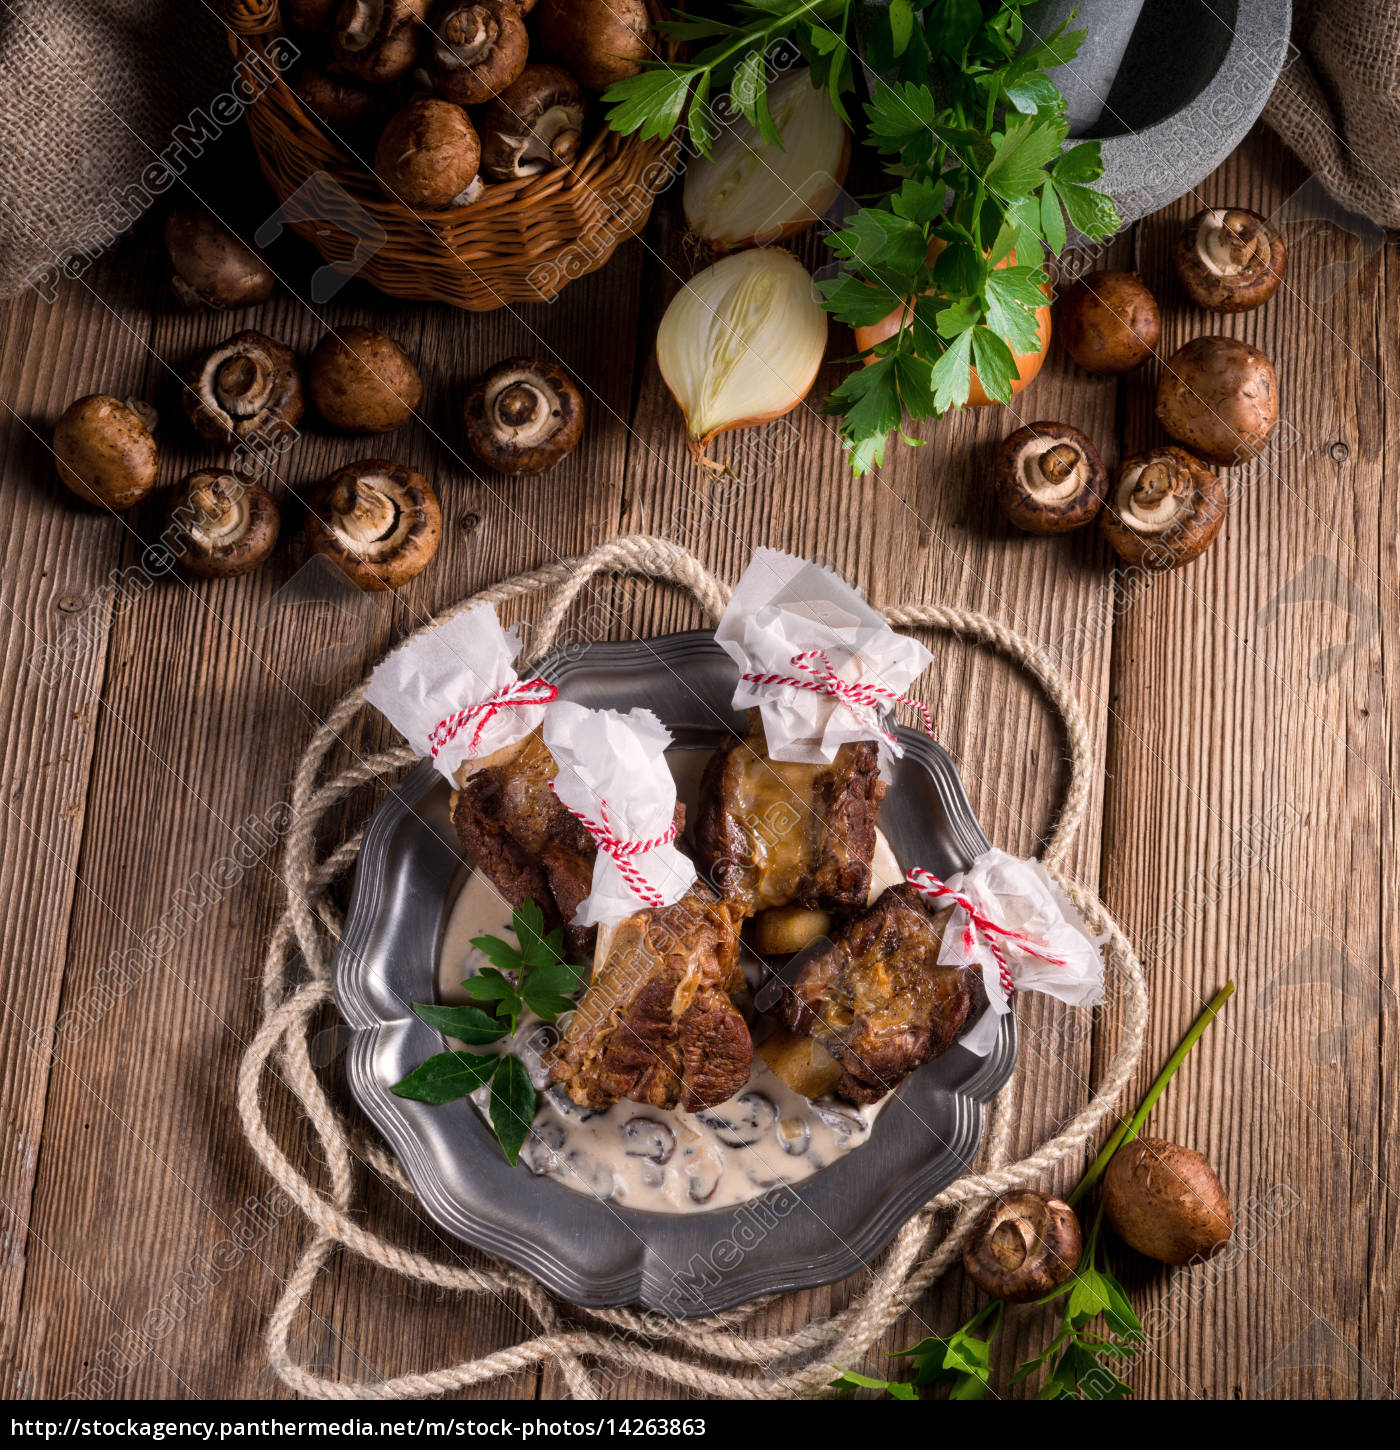 Grilled rinderrippchen with mushroom sauce - Stockfoto - #14263863 ...